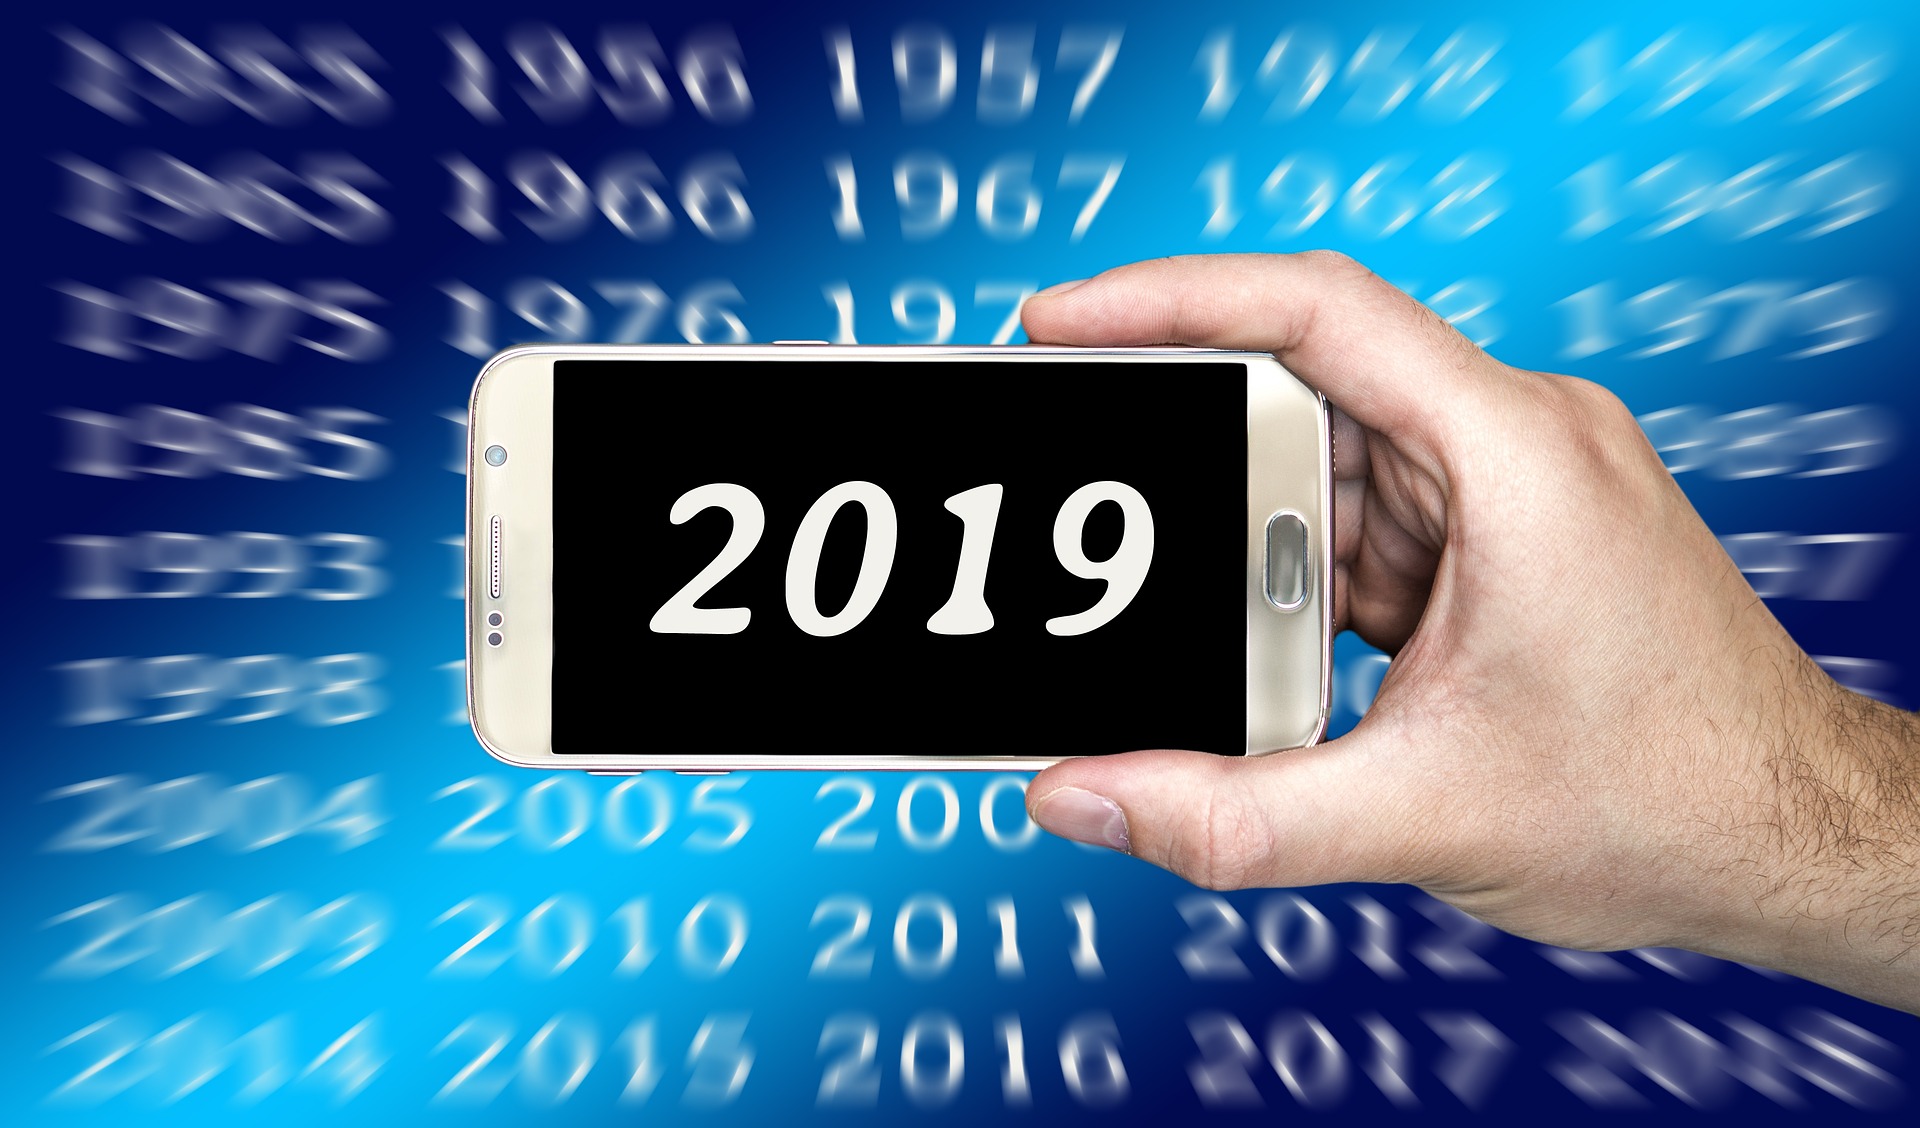 2019-smartphone-calendar-hand-holding-years